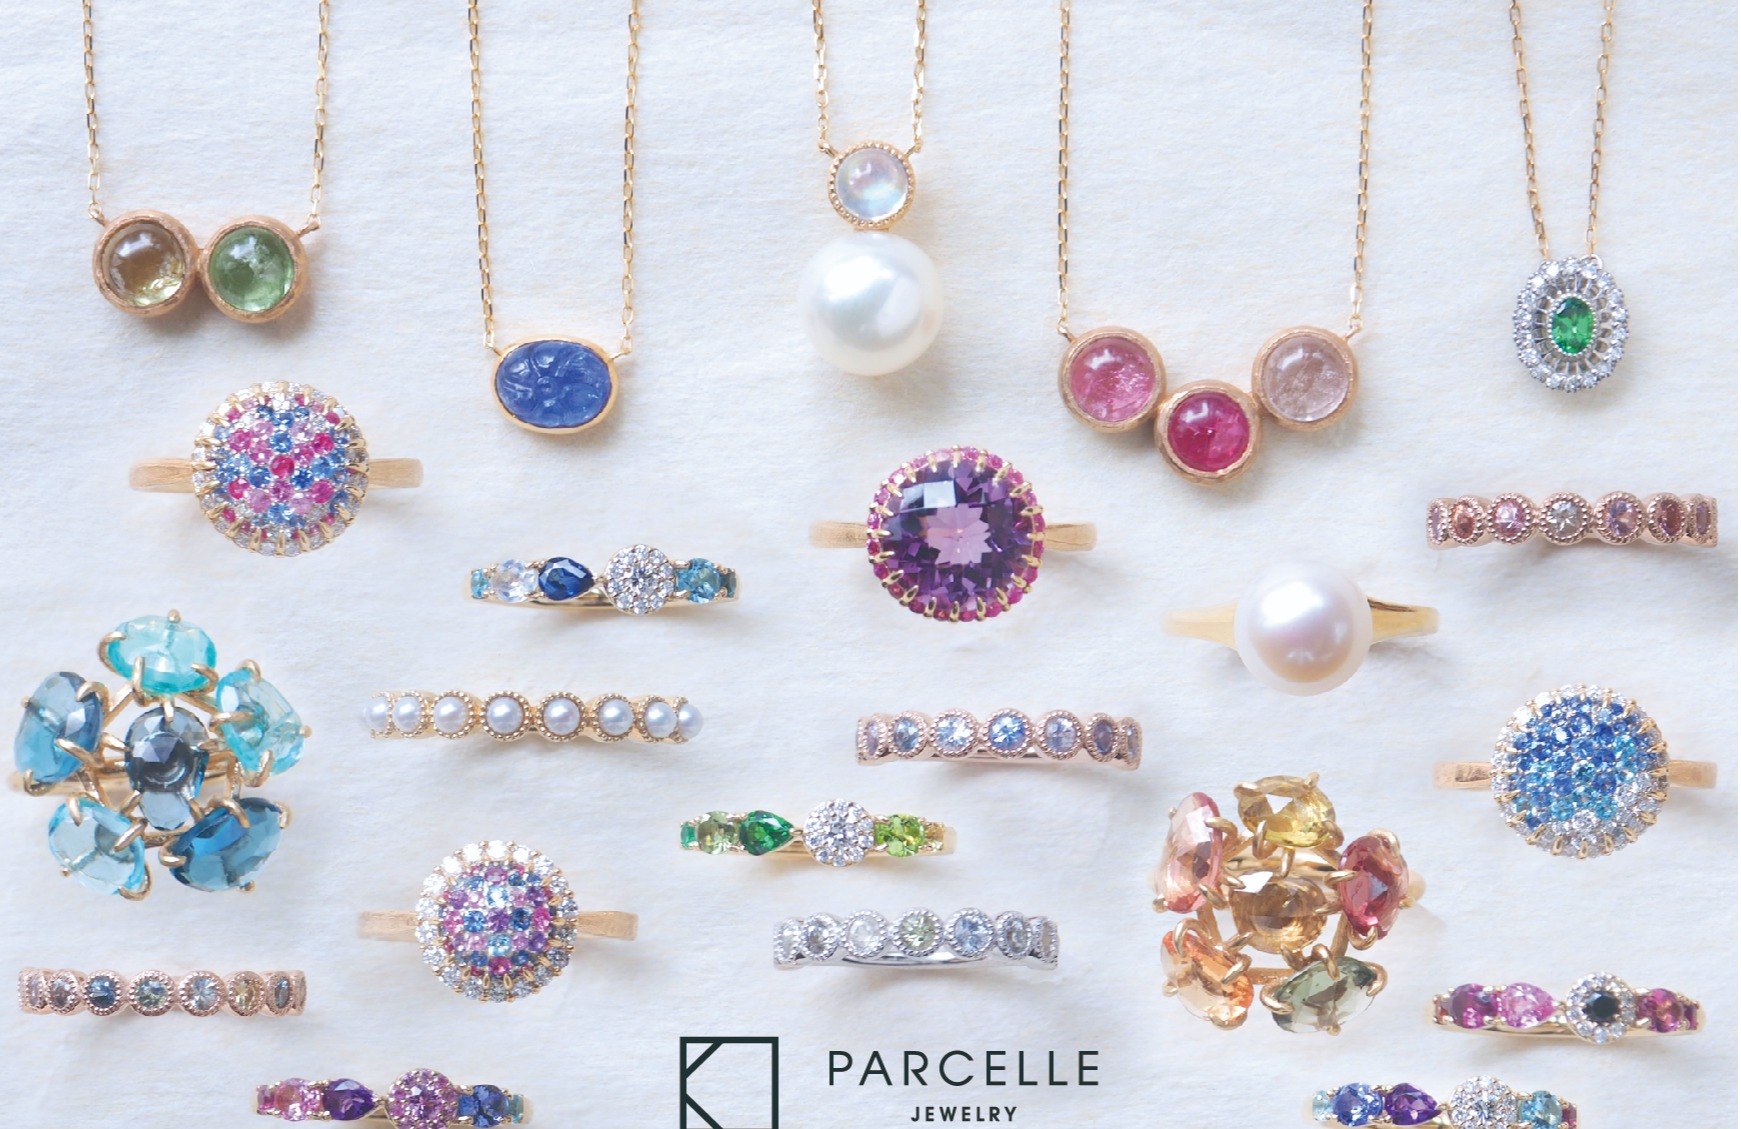 PARCELLE JEWELRY夏天的新作品珠宝和特别定做珠宝展销会